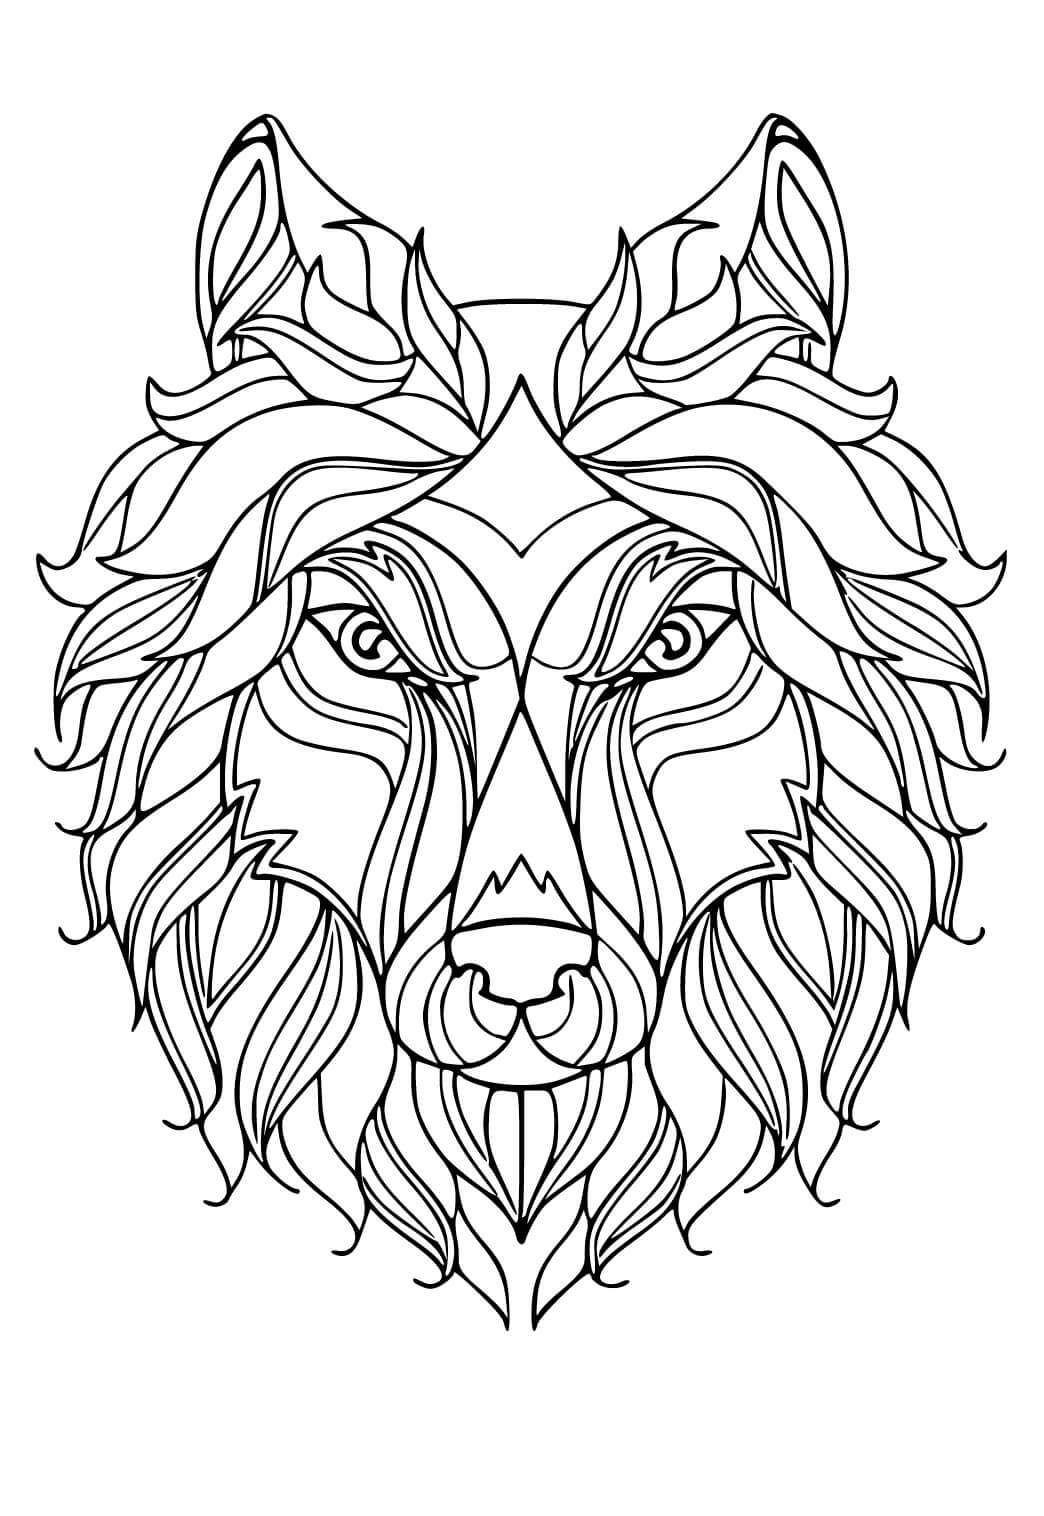 Mandala Wolf Coloring Page - Sheet 5 Mandalas